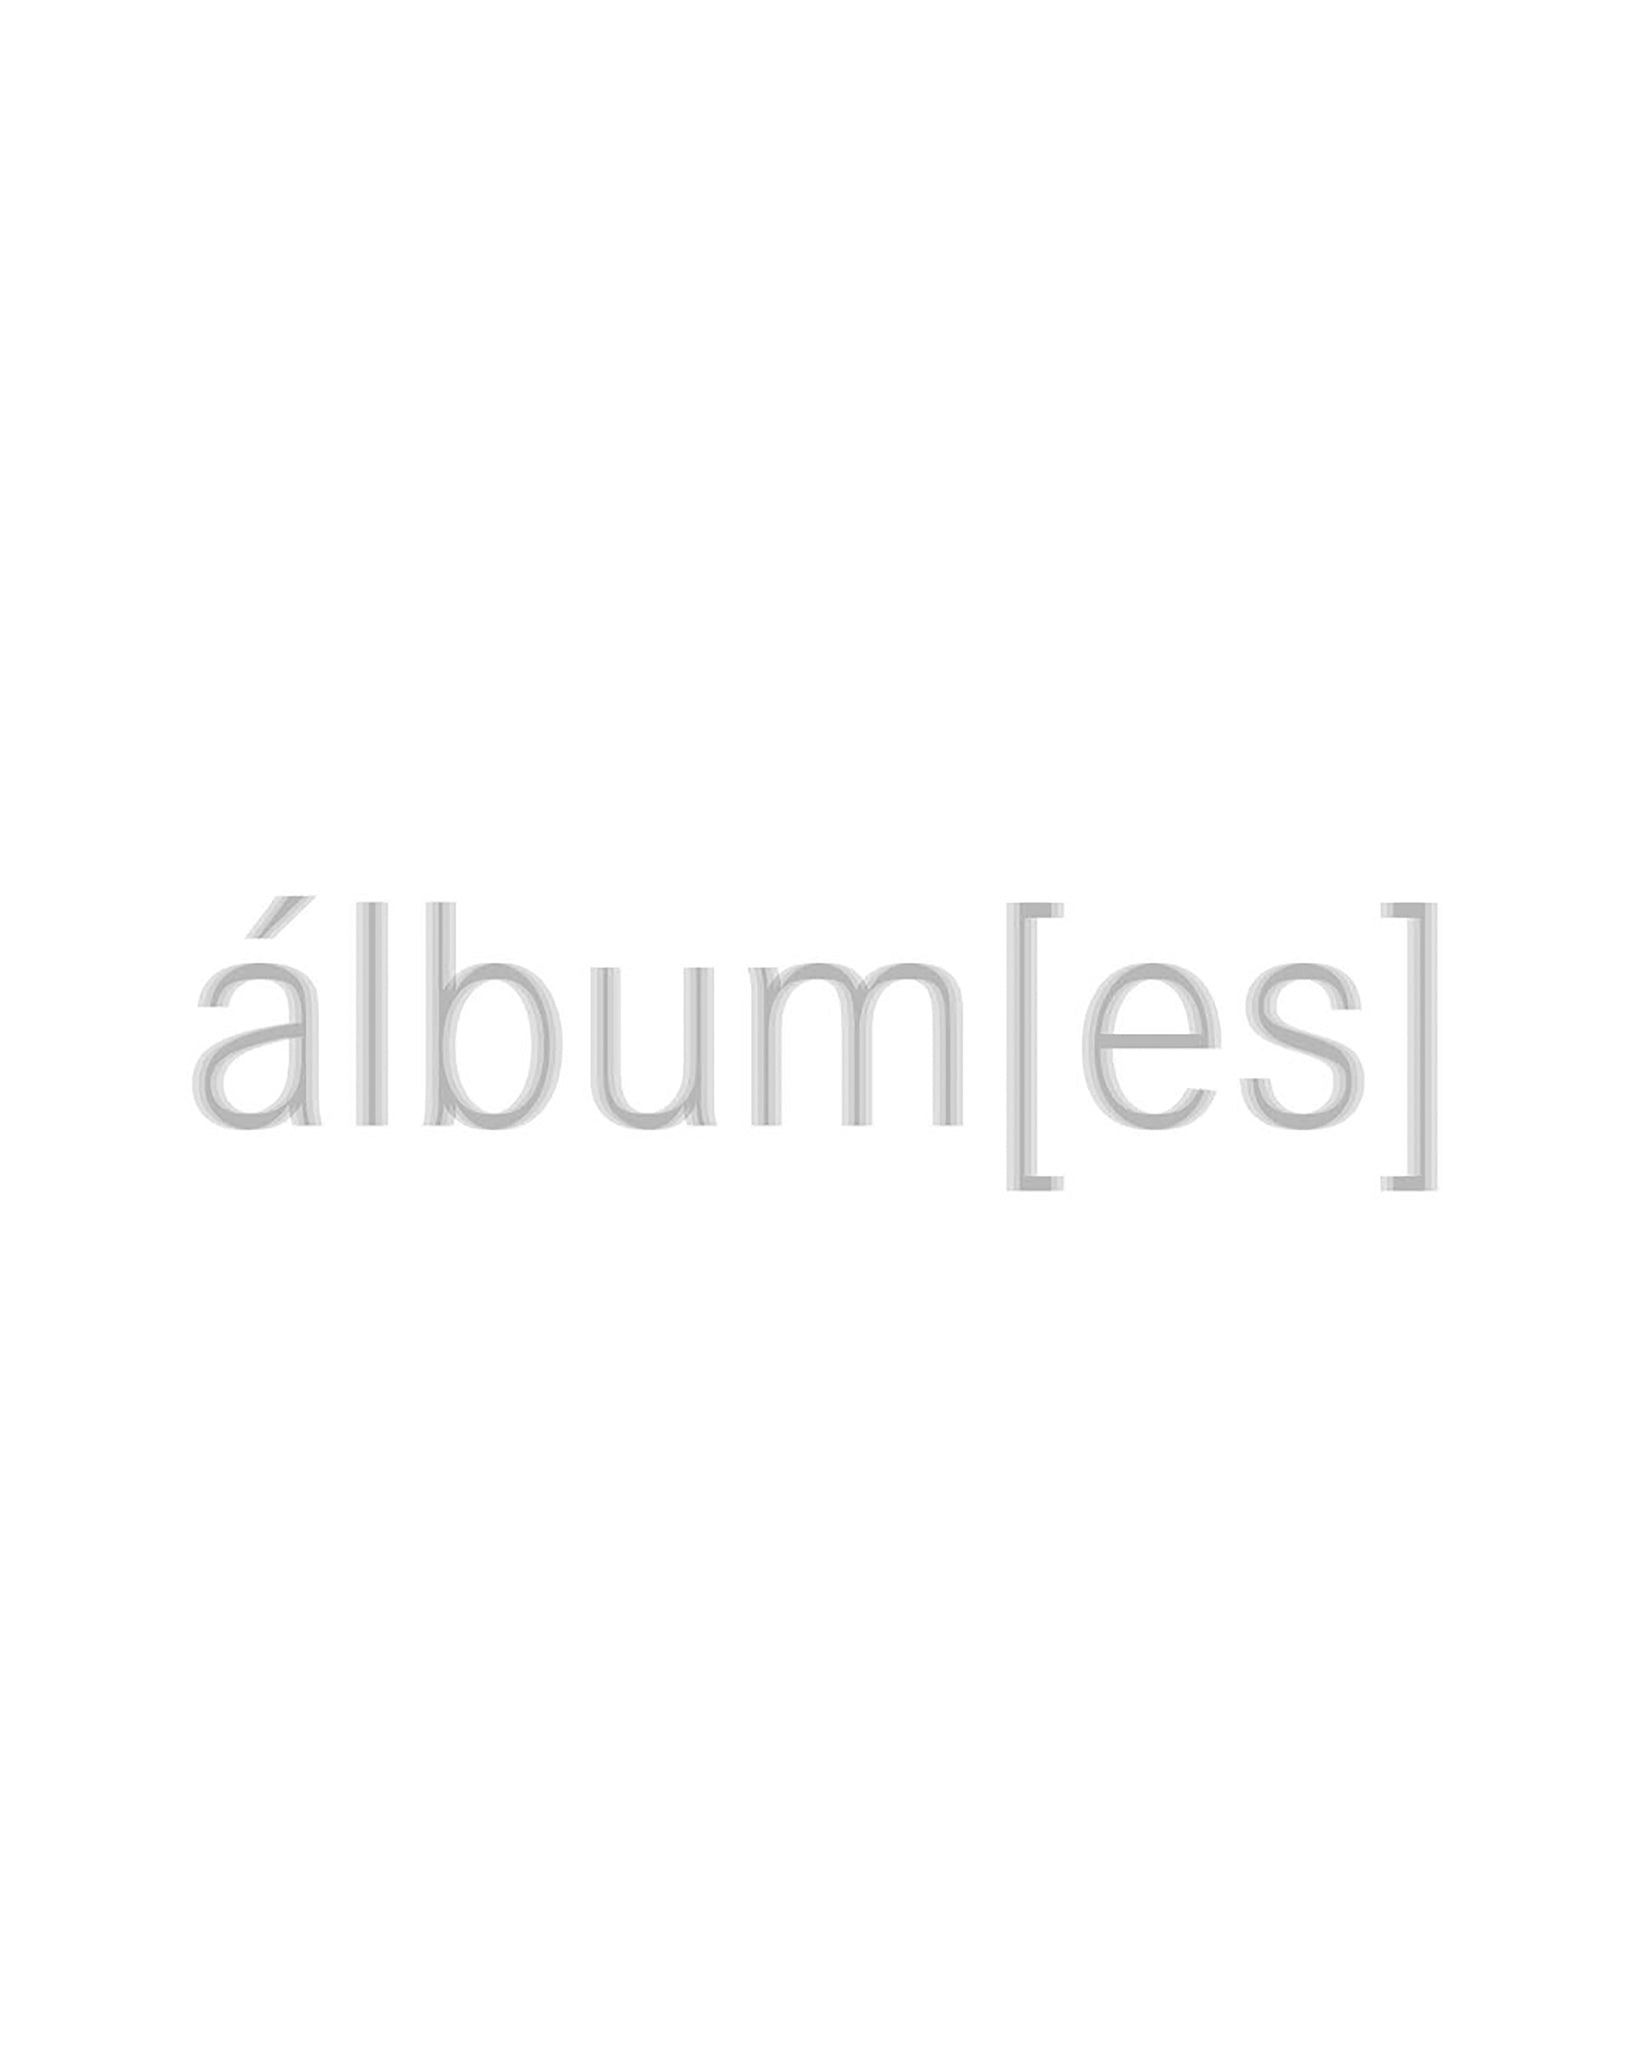 Álbum[es] - 9lunasshop.com